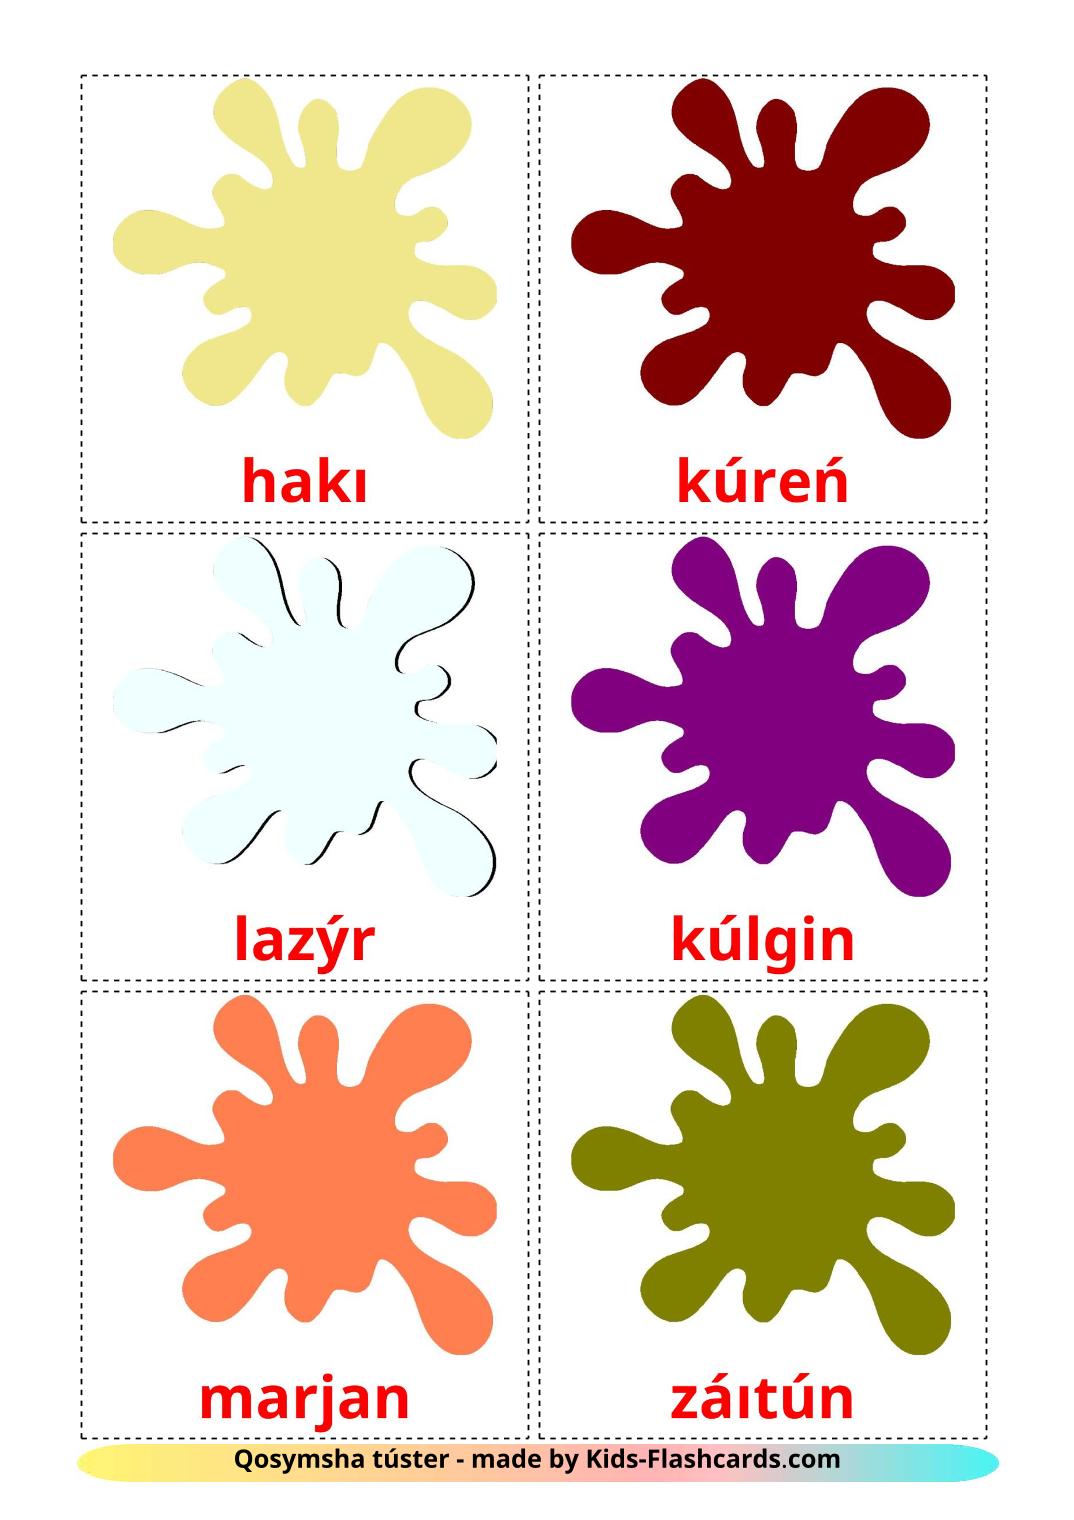 Secondary colors - 20 Free Printable kazakh(latin) Flashcards 